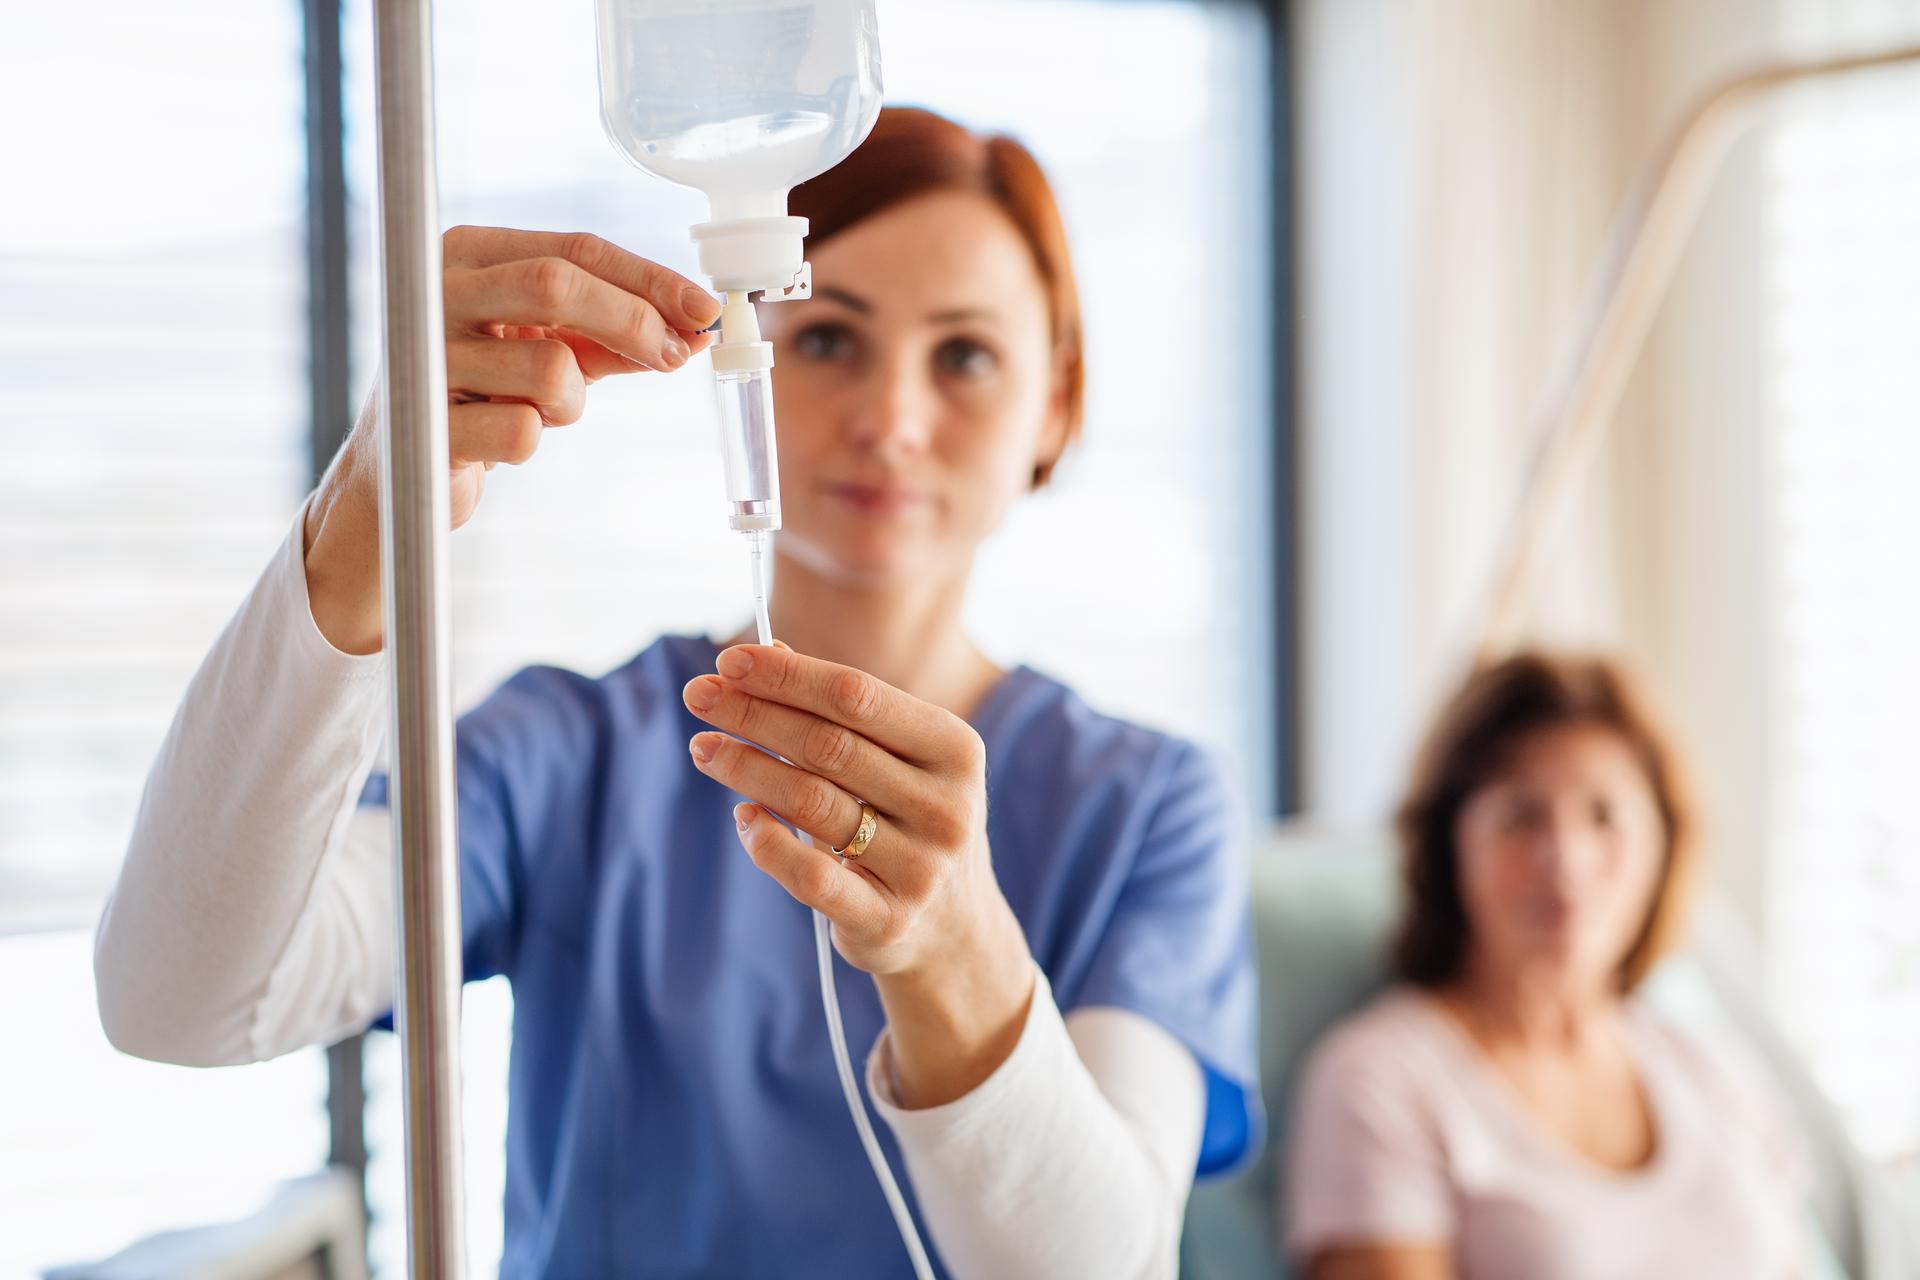 Nurse adjusting intravenous fluid line, patient blurred in background